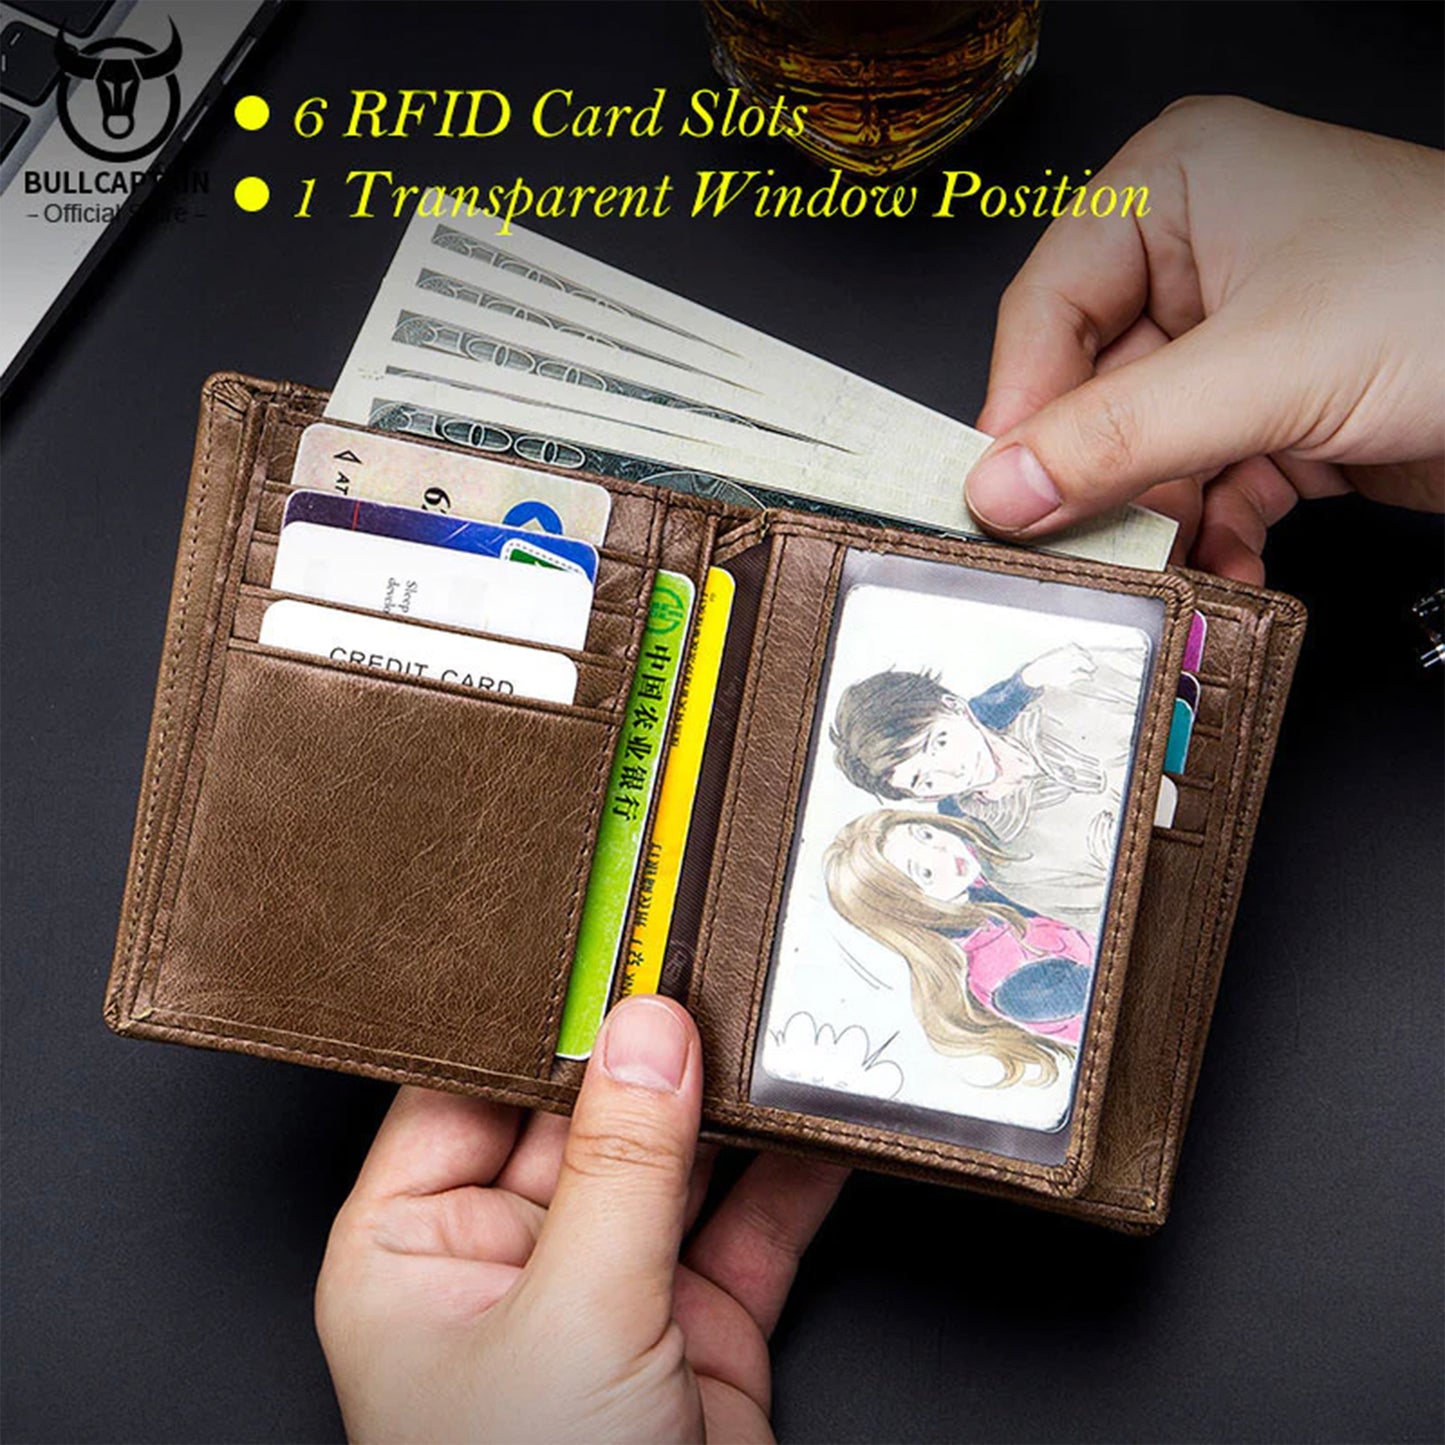 MultiHold Sleek RFID Shielded Vegan Leather Wallet